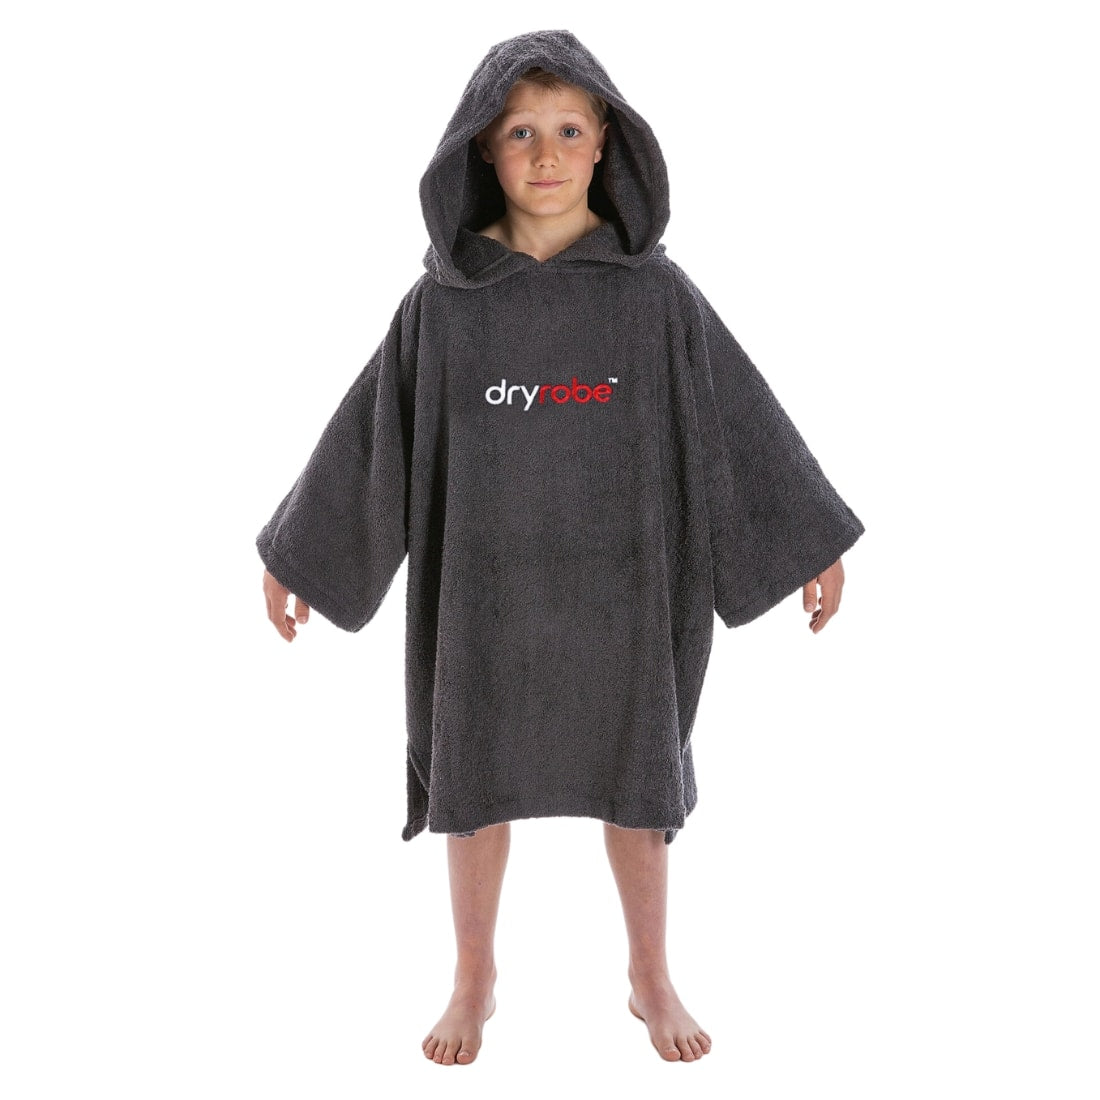 Dryrobe Youth Kids Organic Cotton Short Sleeve Towel Robe - Slate Grey - Changing Robe Poncho Towel by Dryrobe 10-14 Years